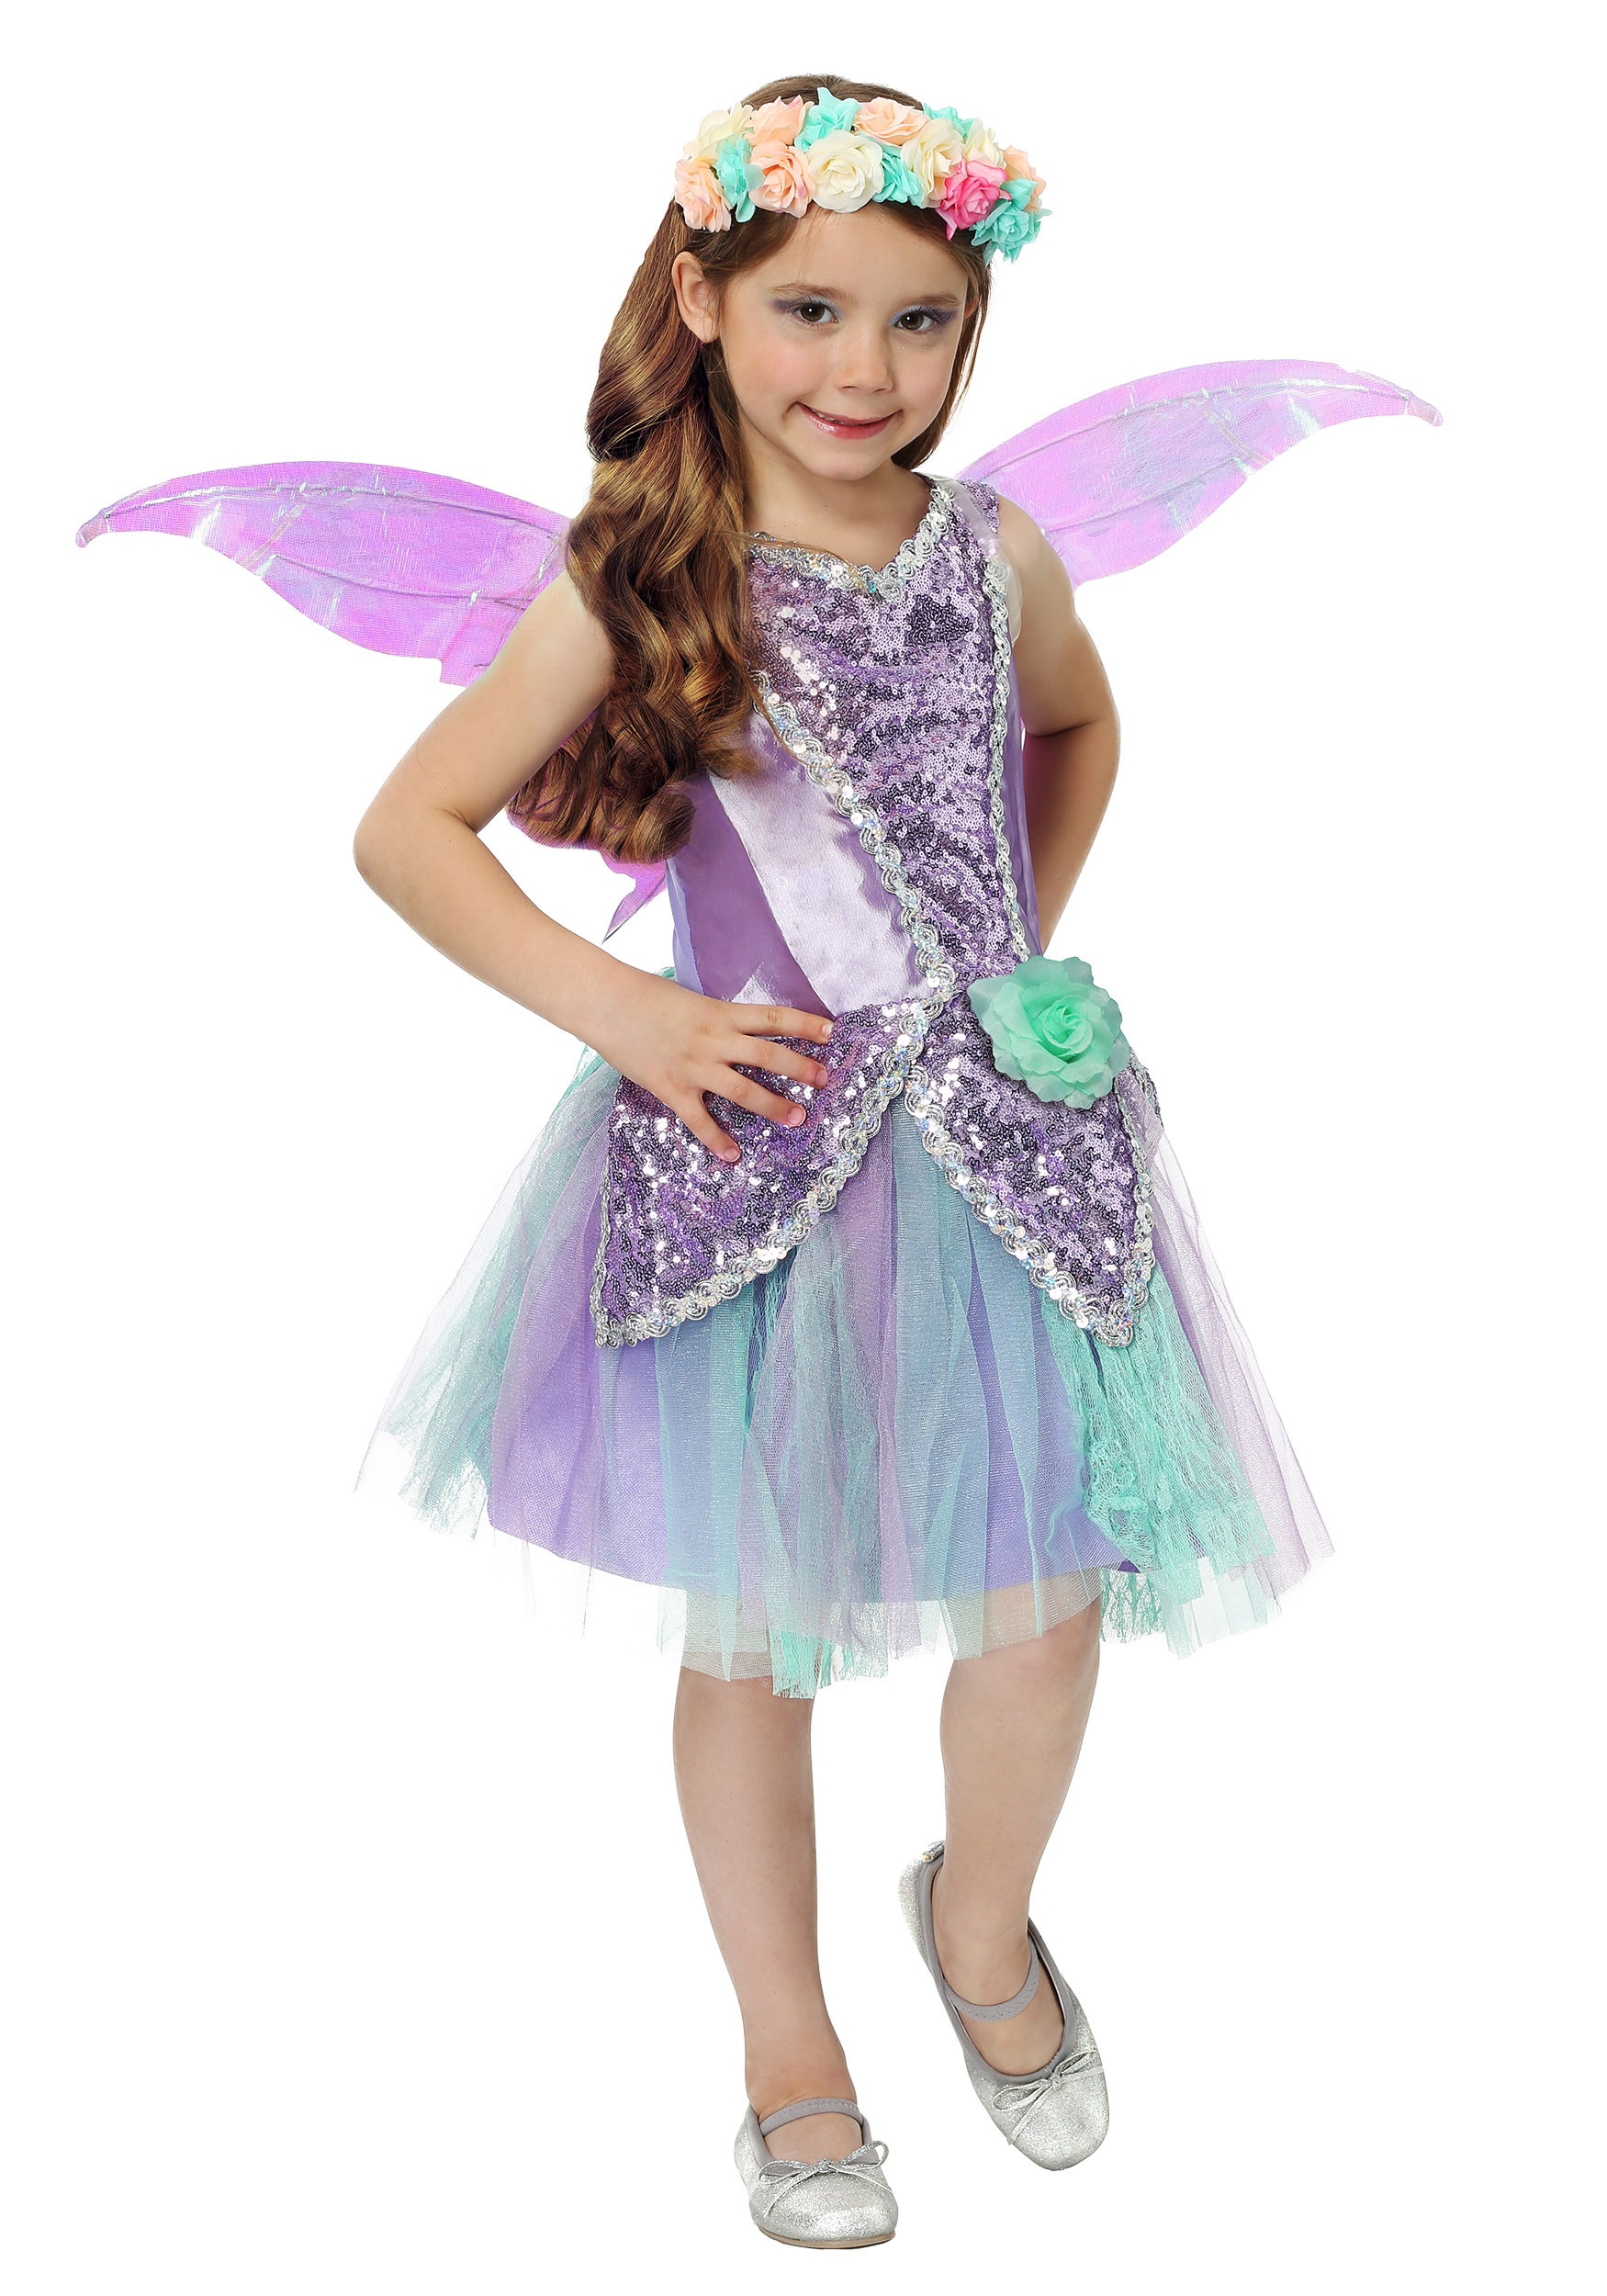 Pin by Carolina Fersana on Moda y estilo disfraz  Fairy costume for girl,  Fairy princess costume, Fairy costume kids